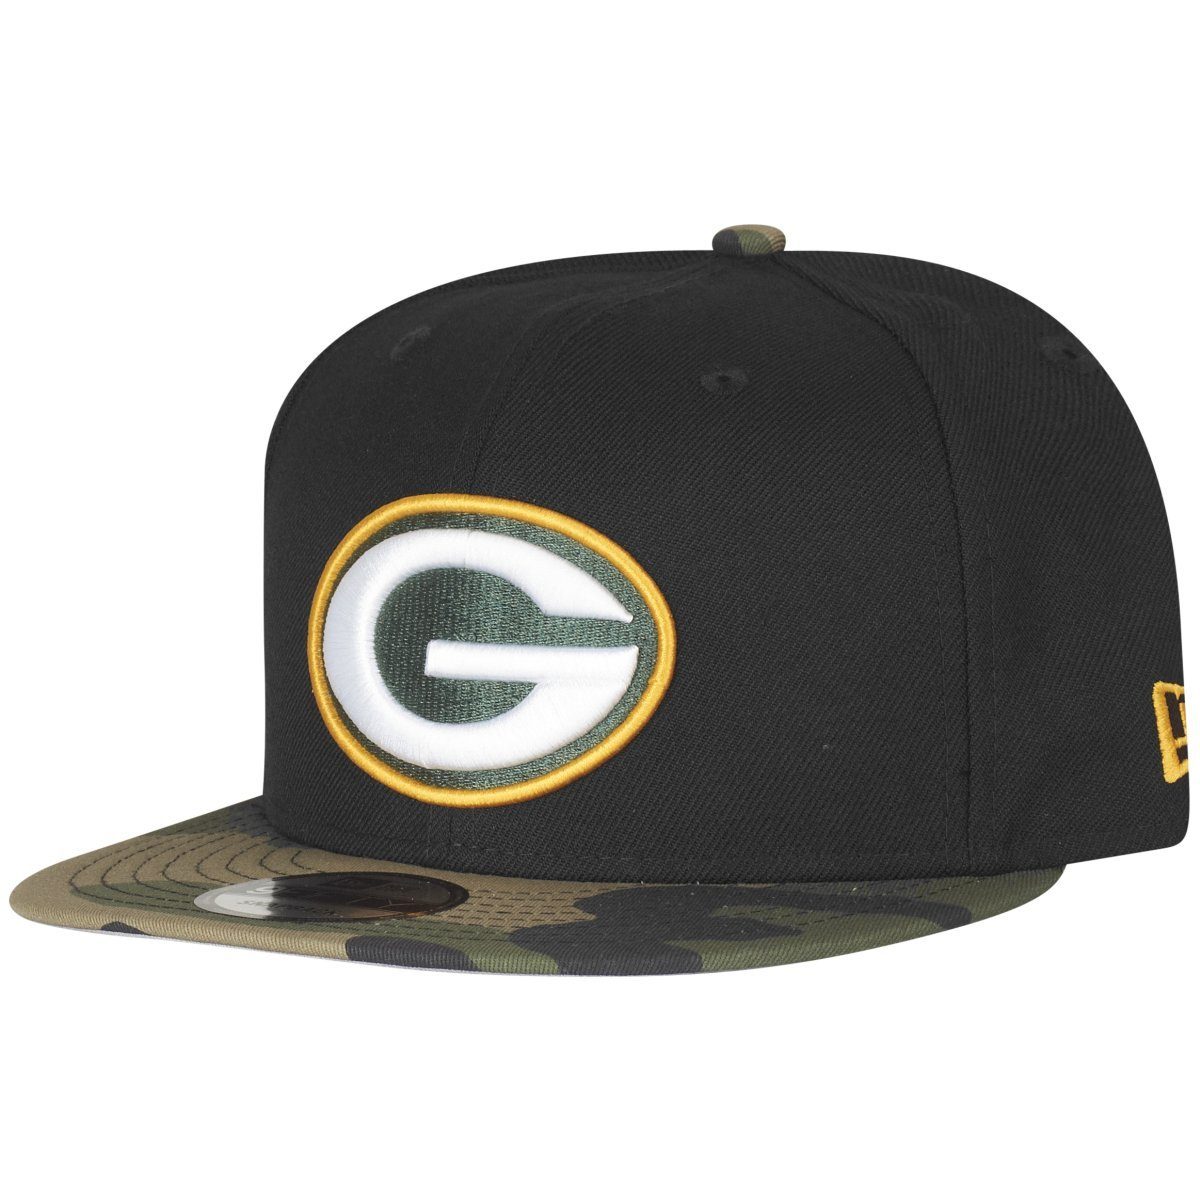 New Era Snapback Cap 9Fifty Green Bay Packers